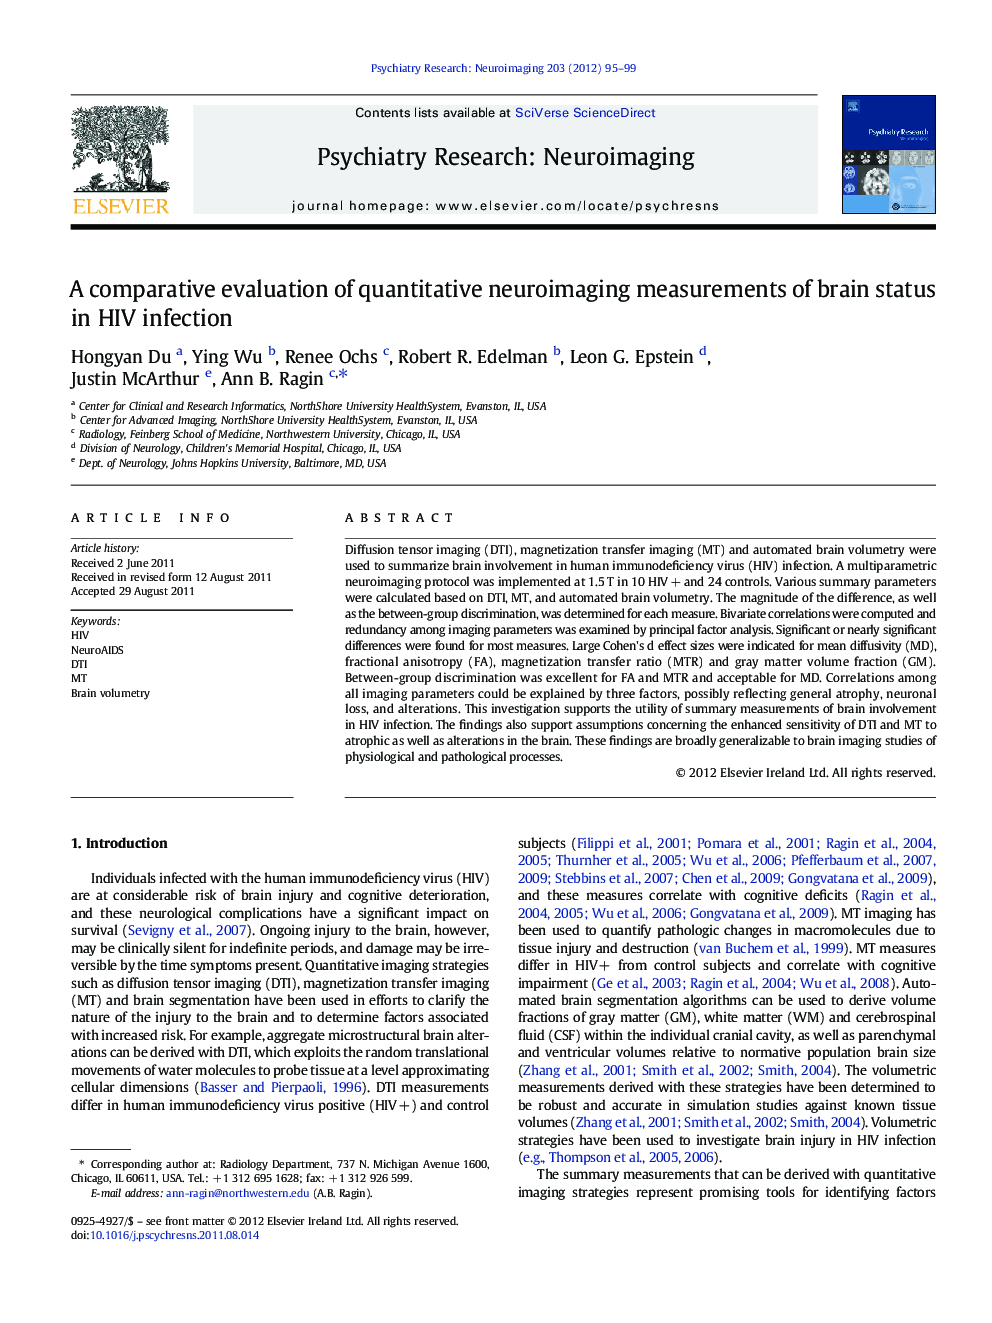 A comparative evaluation of quantitative neuroimaging measurements of brain status in HIV infection